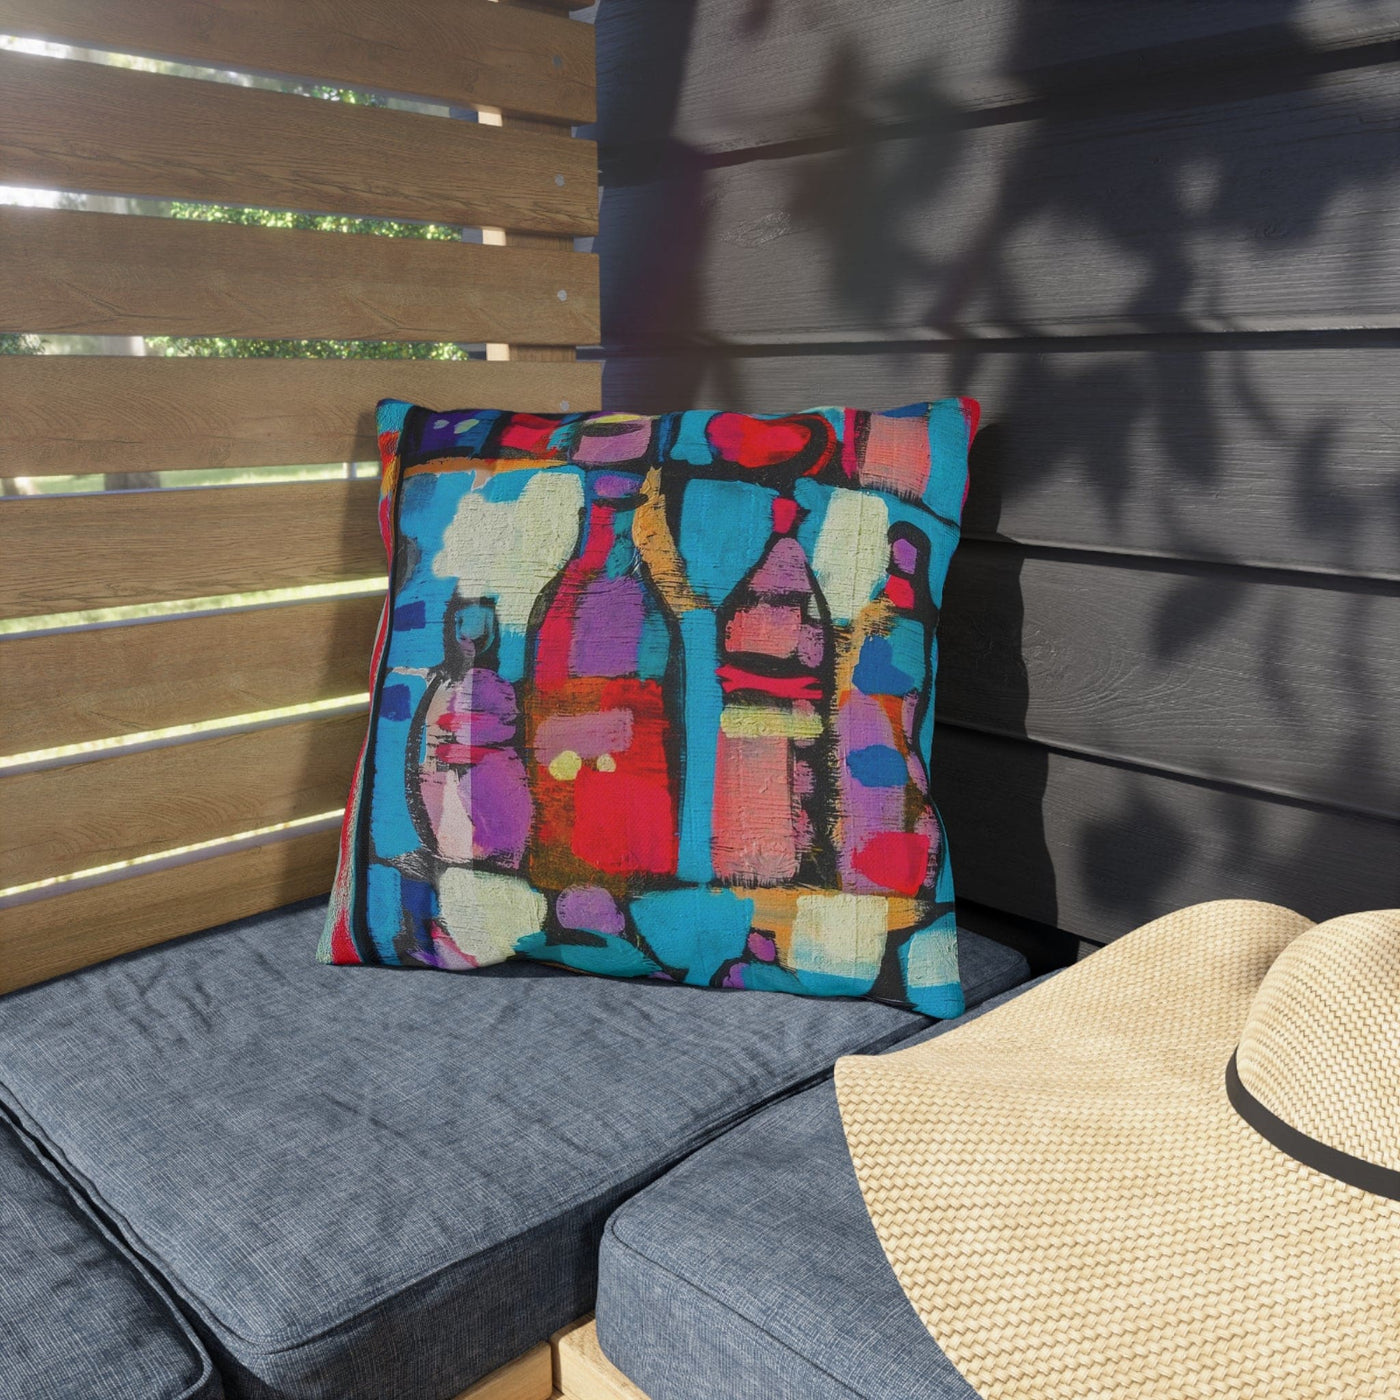 Decorative Outdoor Pillows With Zipper - Set Of 2 Sutileza Smooth Colorful